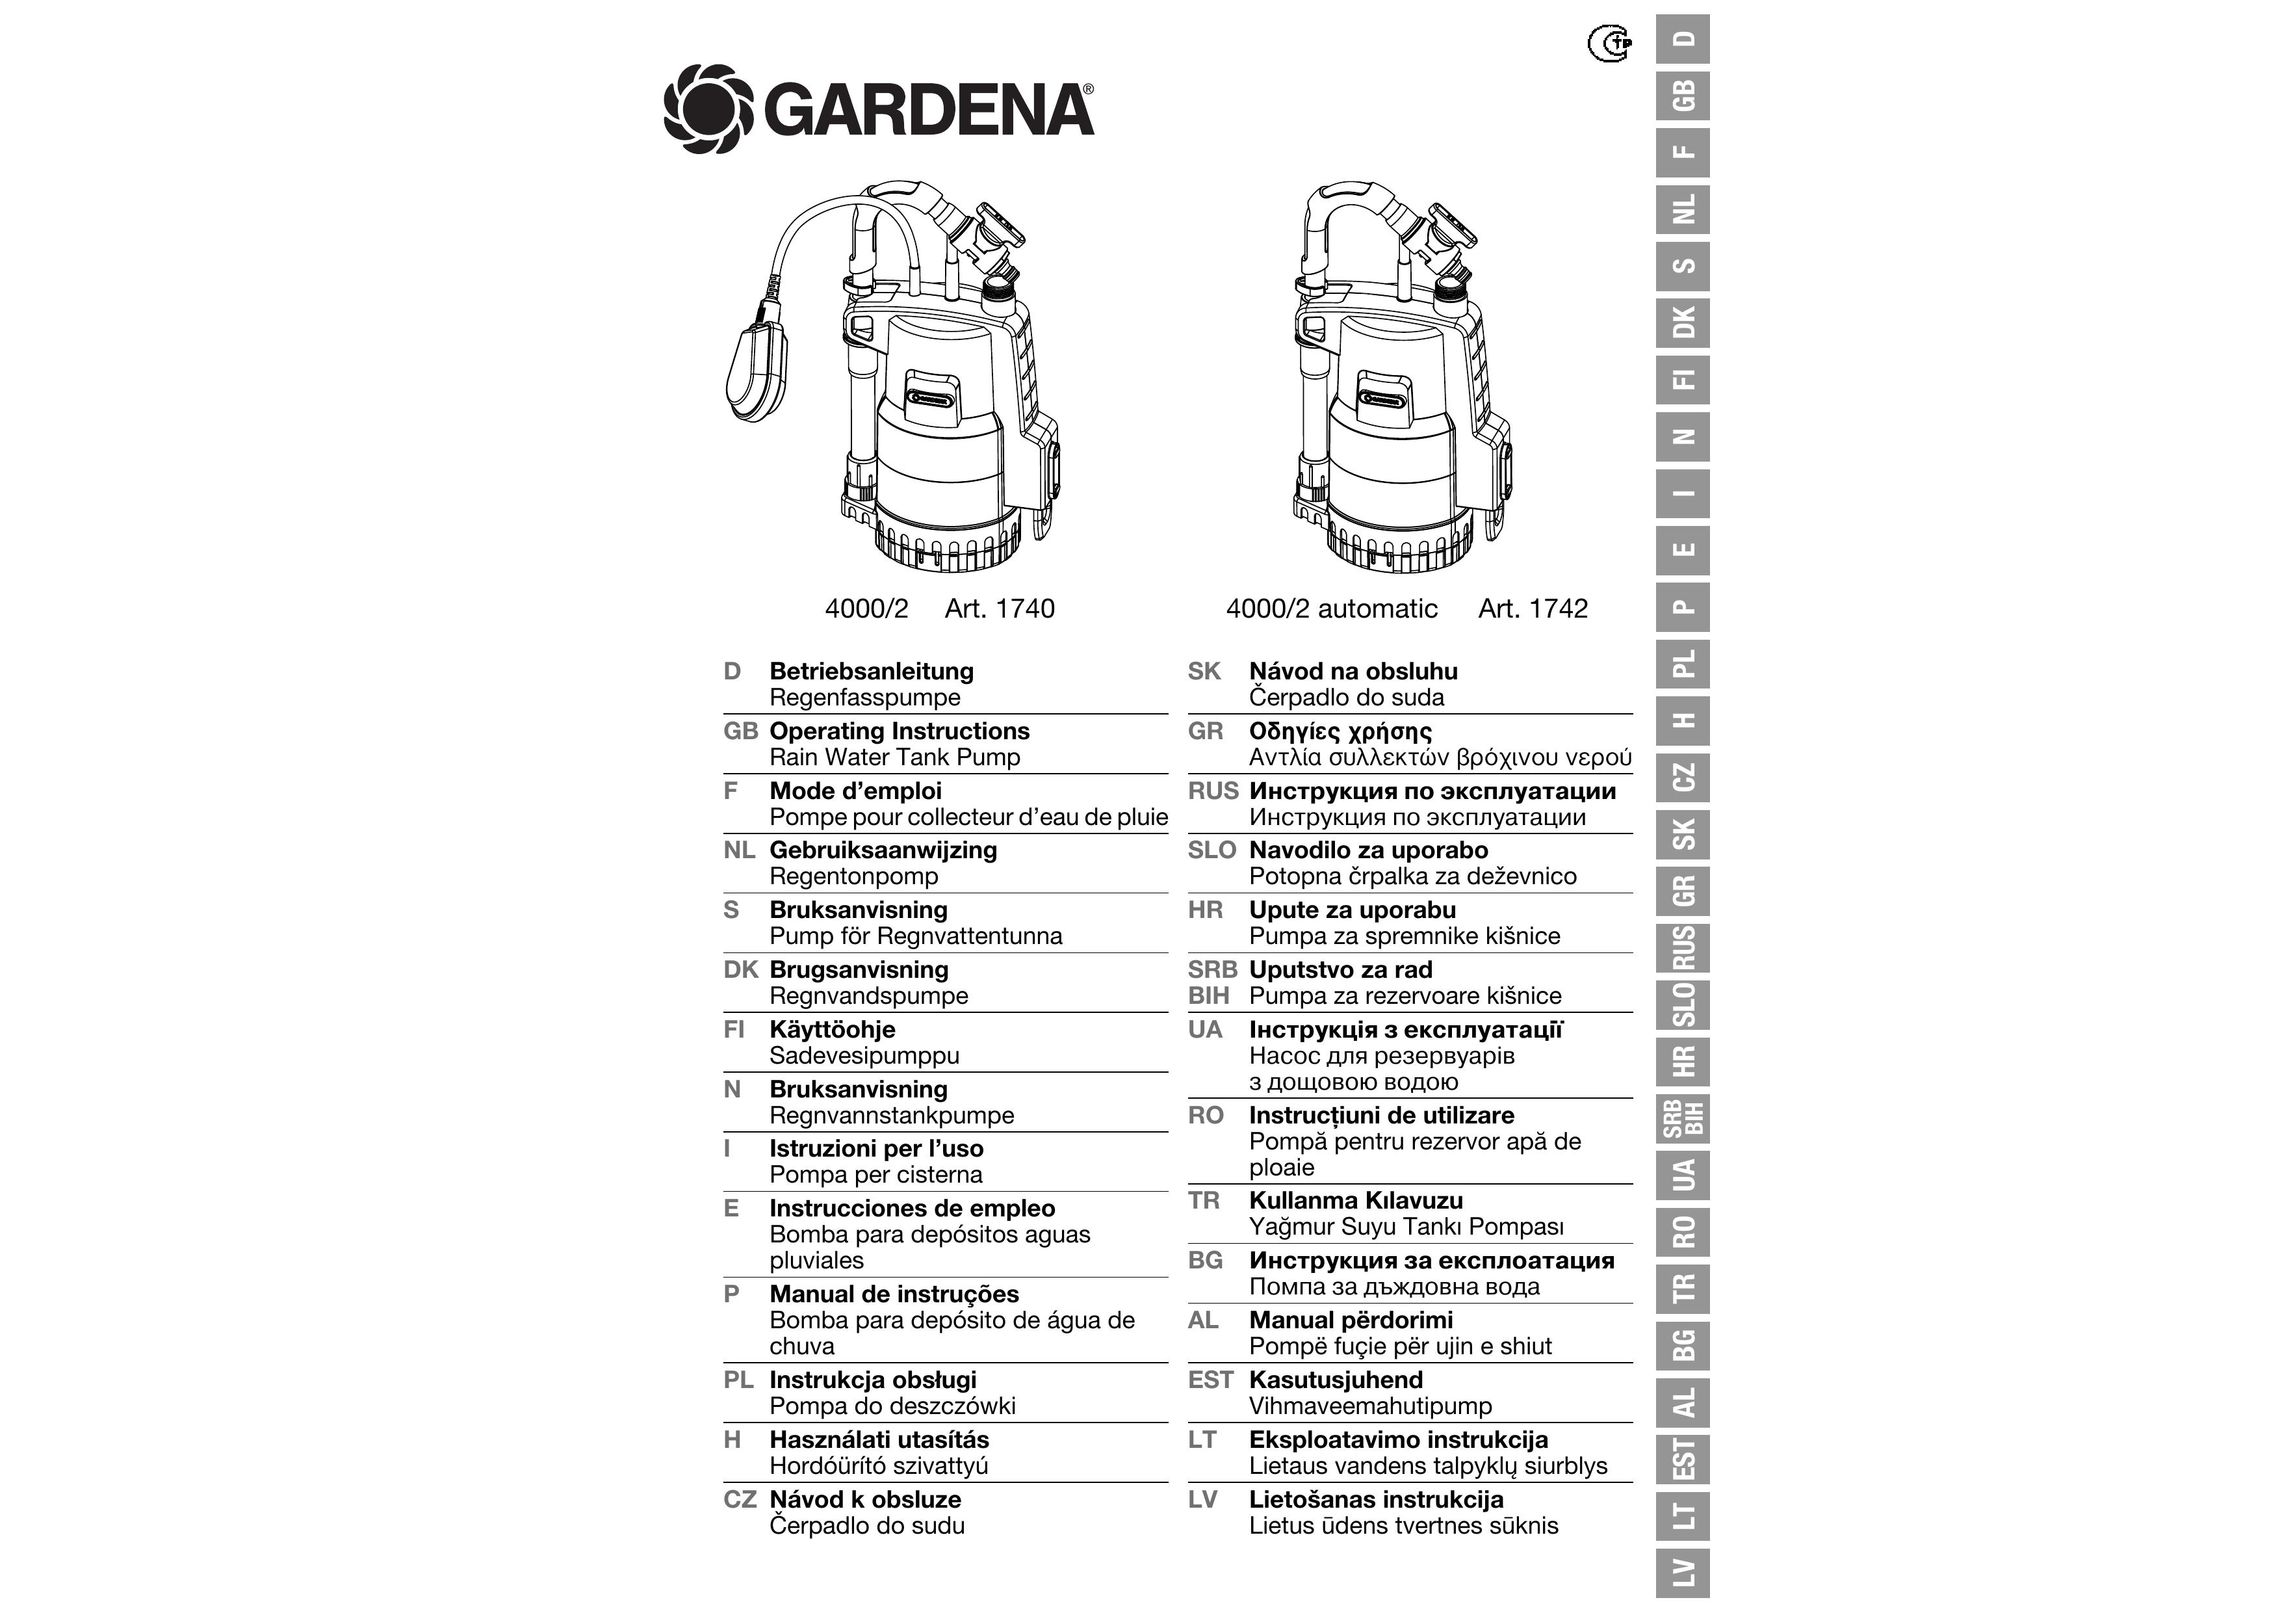 Gardena 40002 automatic Water Pump User Manual